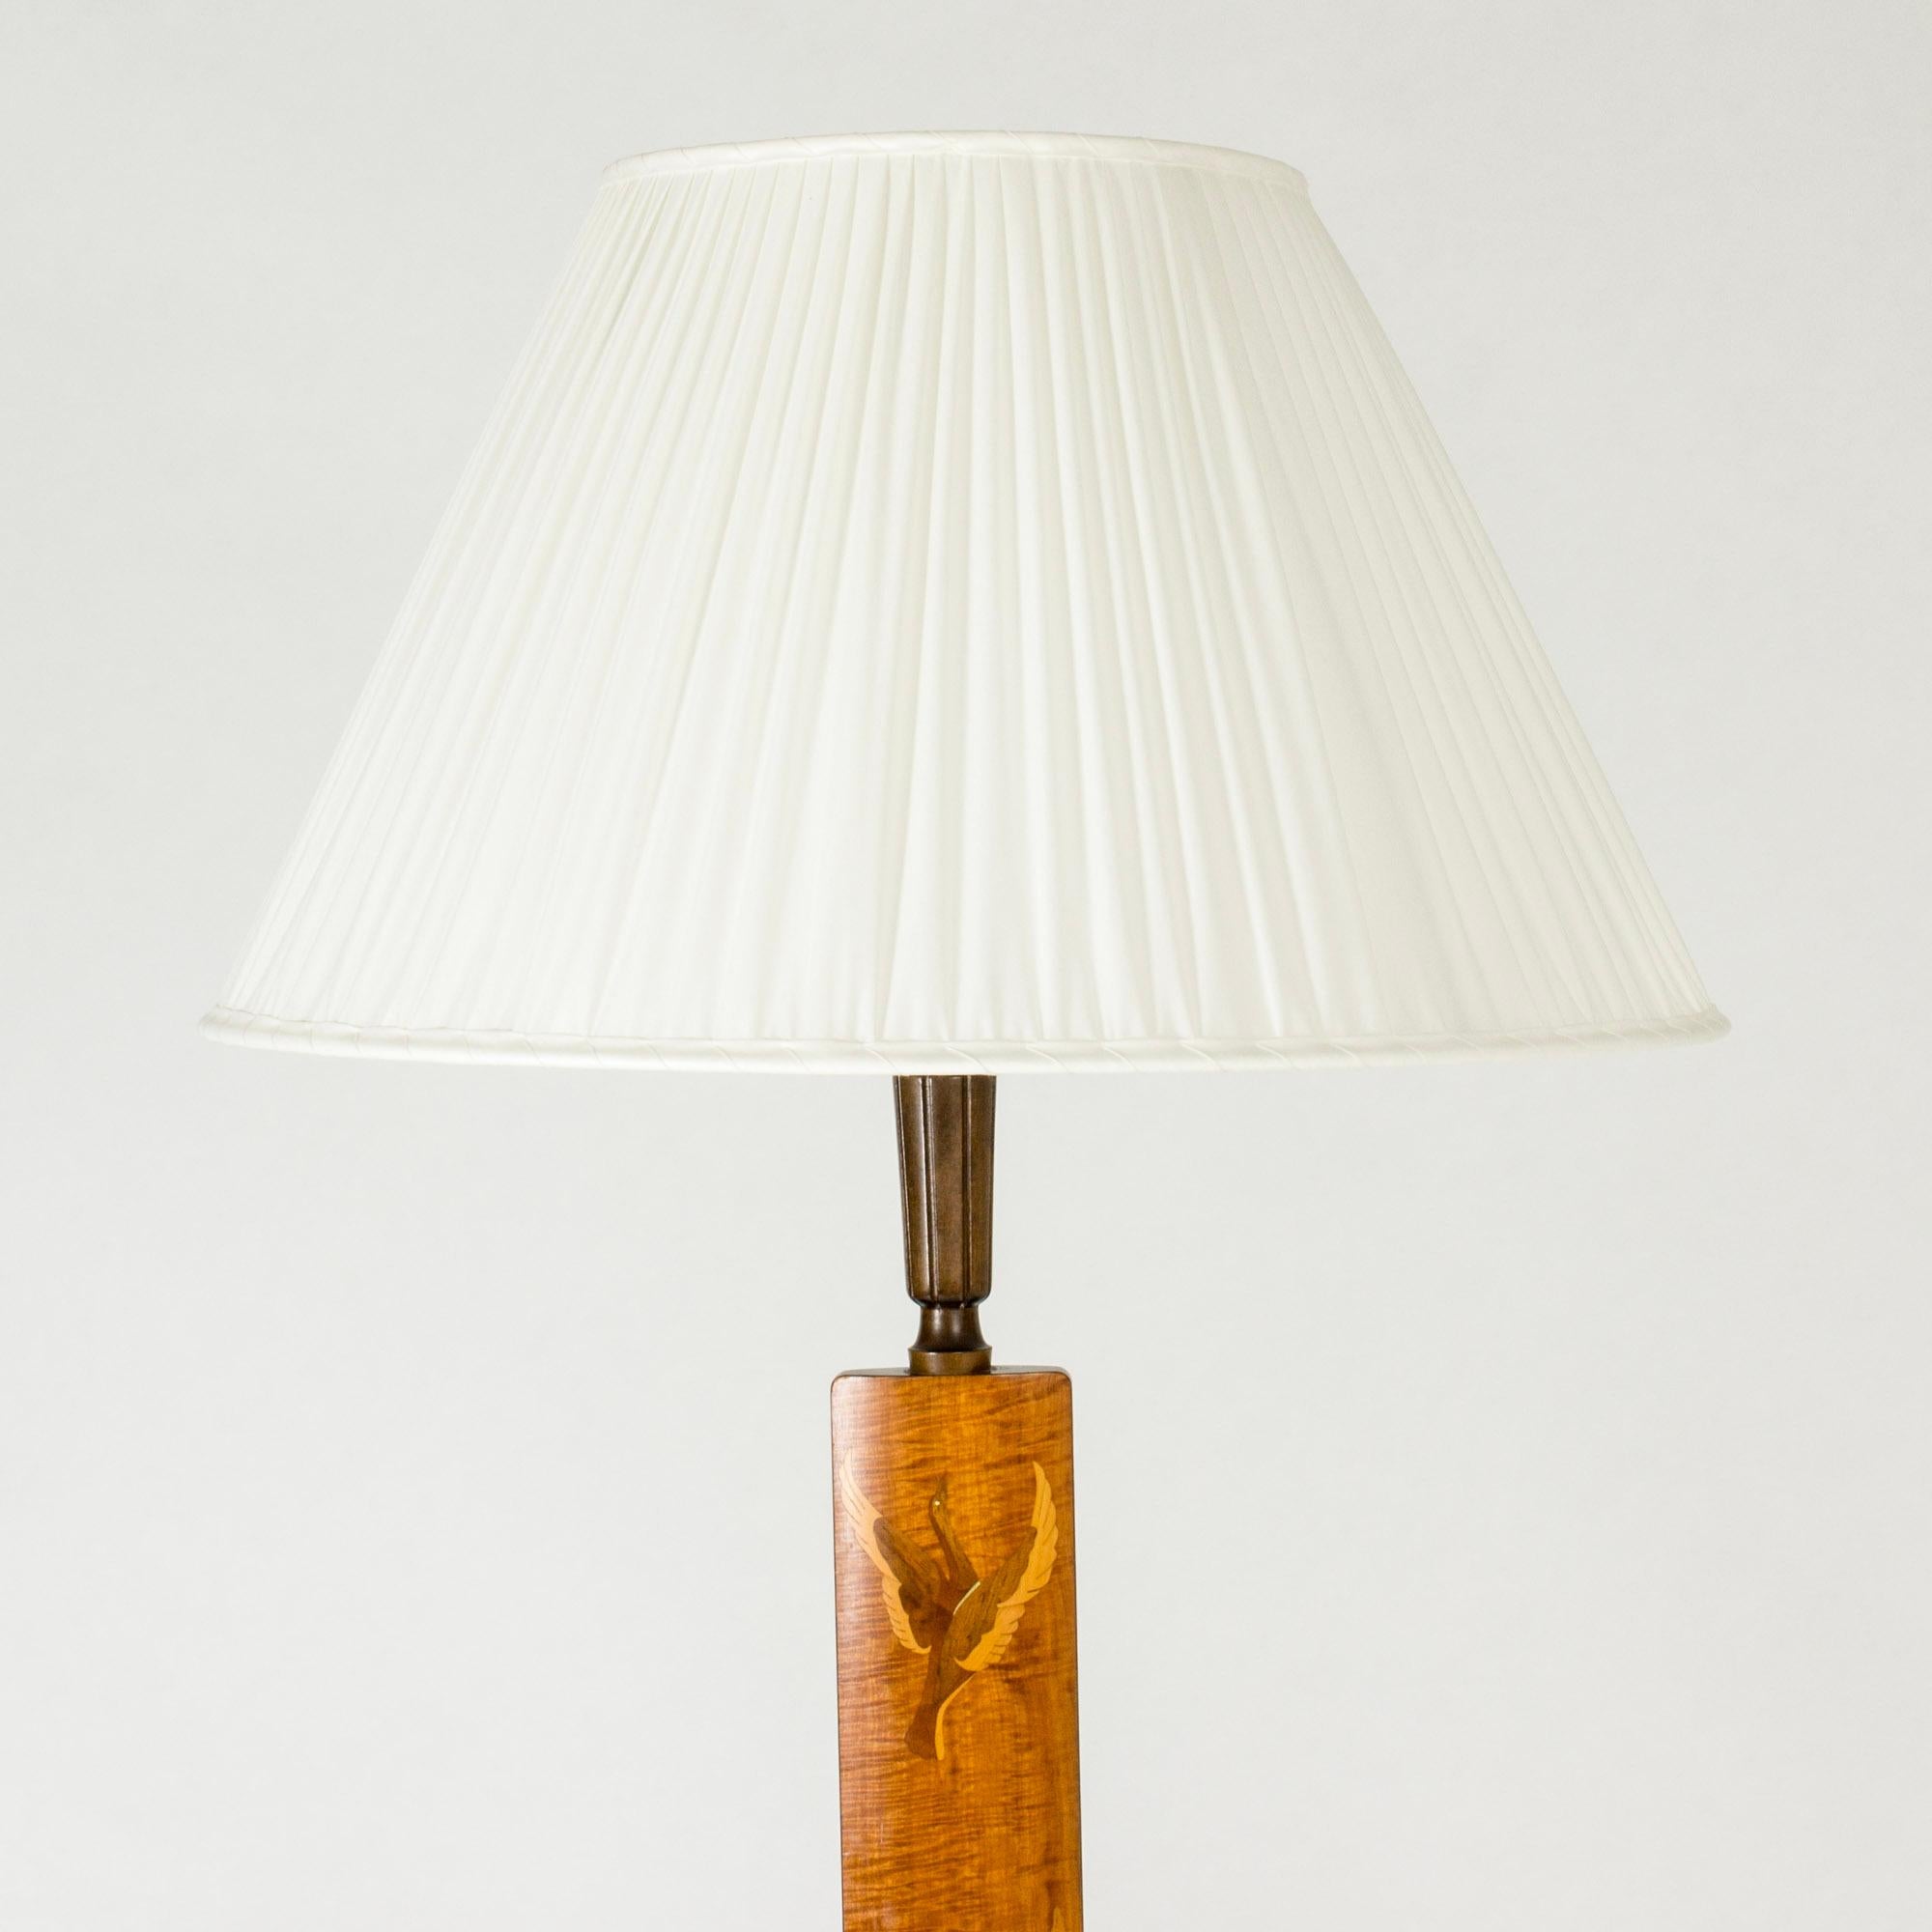 Scandinavian Modern Swedish Modern floor lamp with inlays, Mjölby Intarsia, Sweden, 1930s For Sale